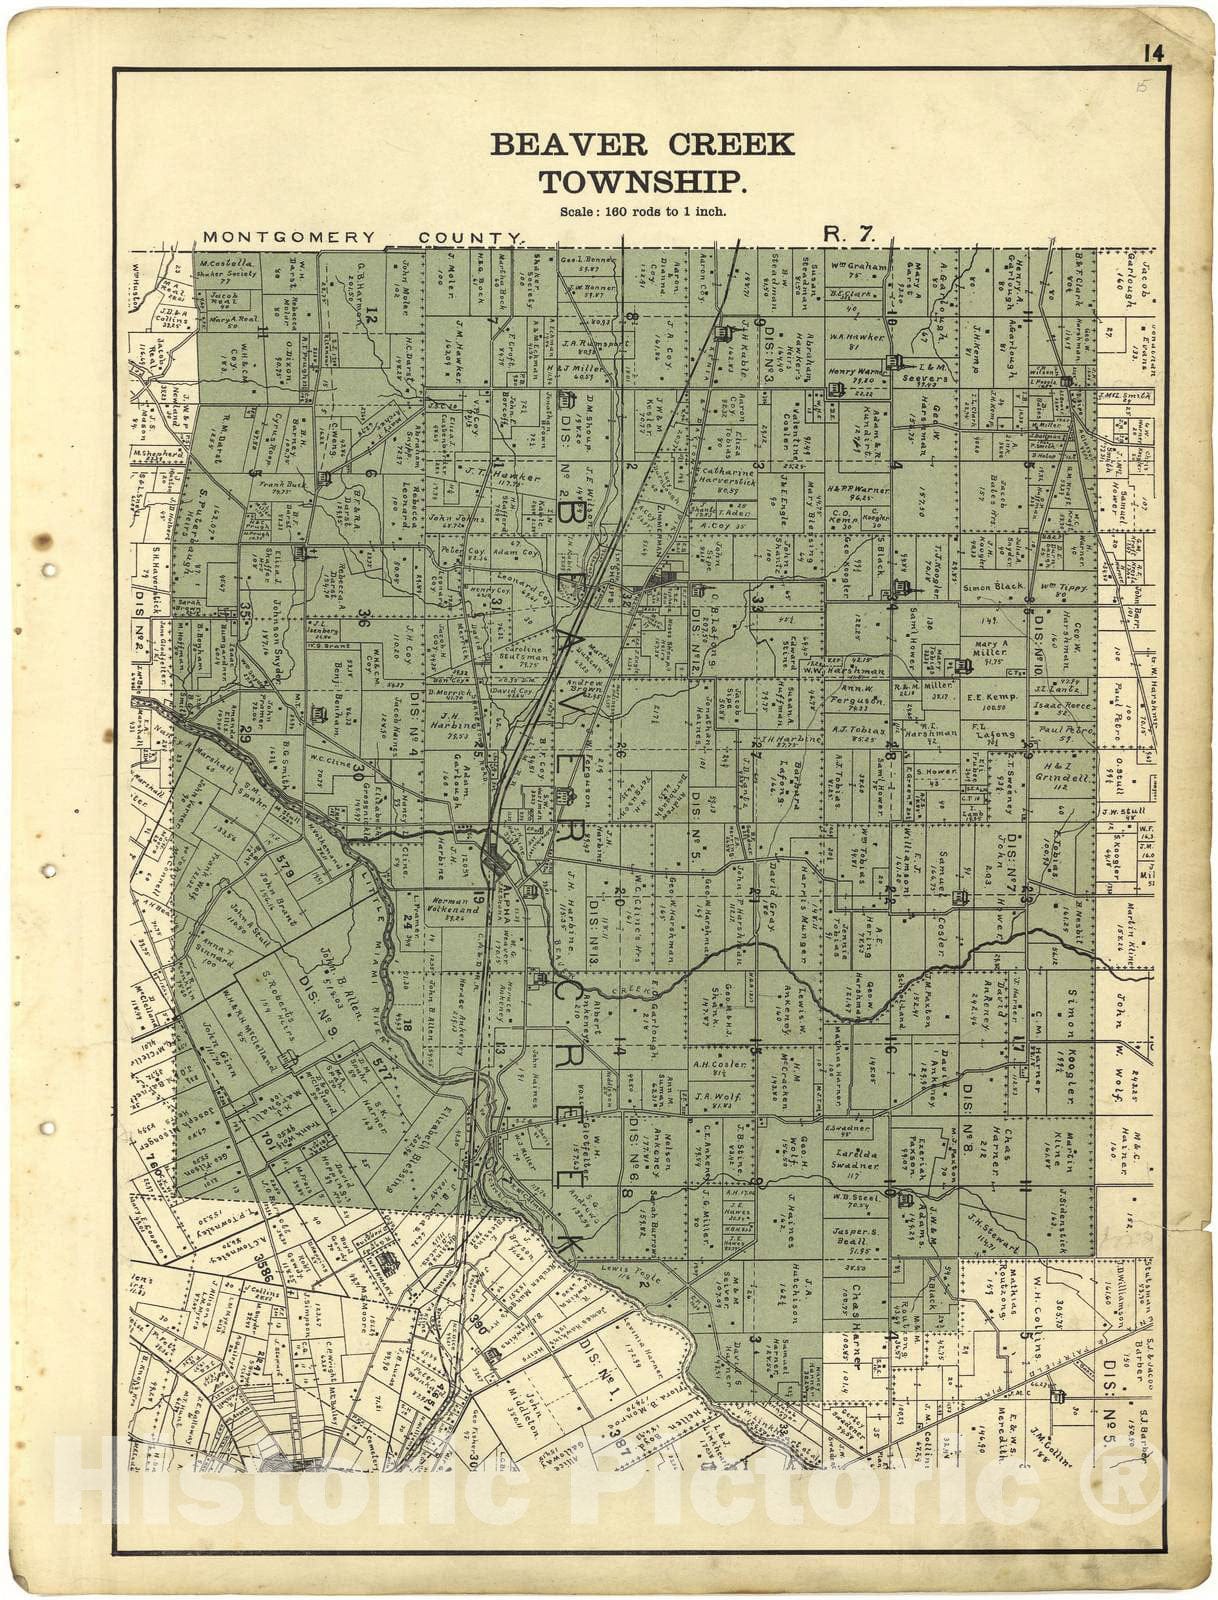 Historic 1896 Map - Riddell's Greene County Atlas, 1896. - Beaver Creek Township - Riddell's Atlas of Greene County, Ohio :